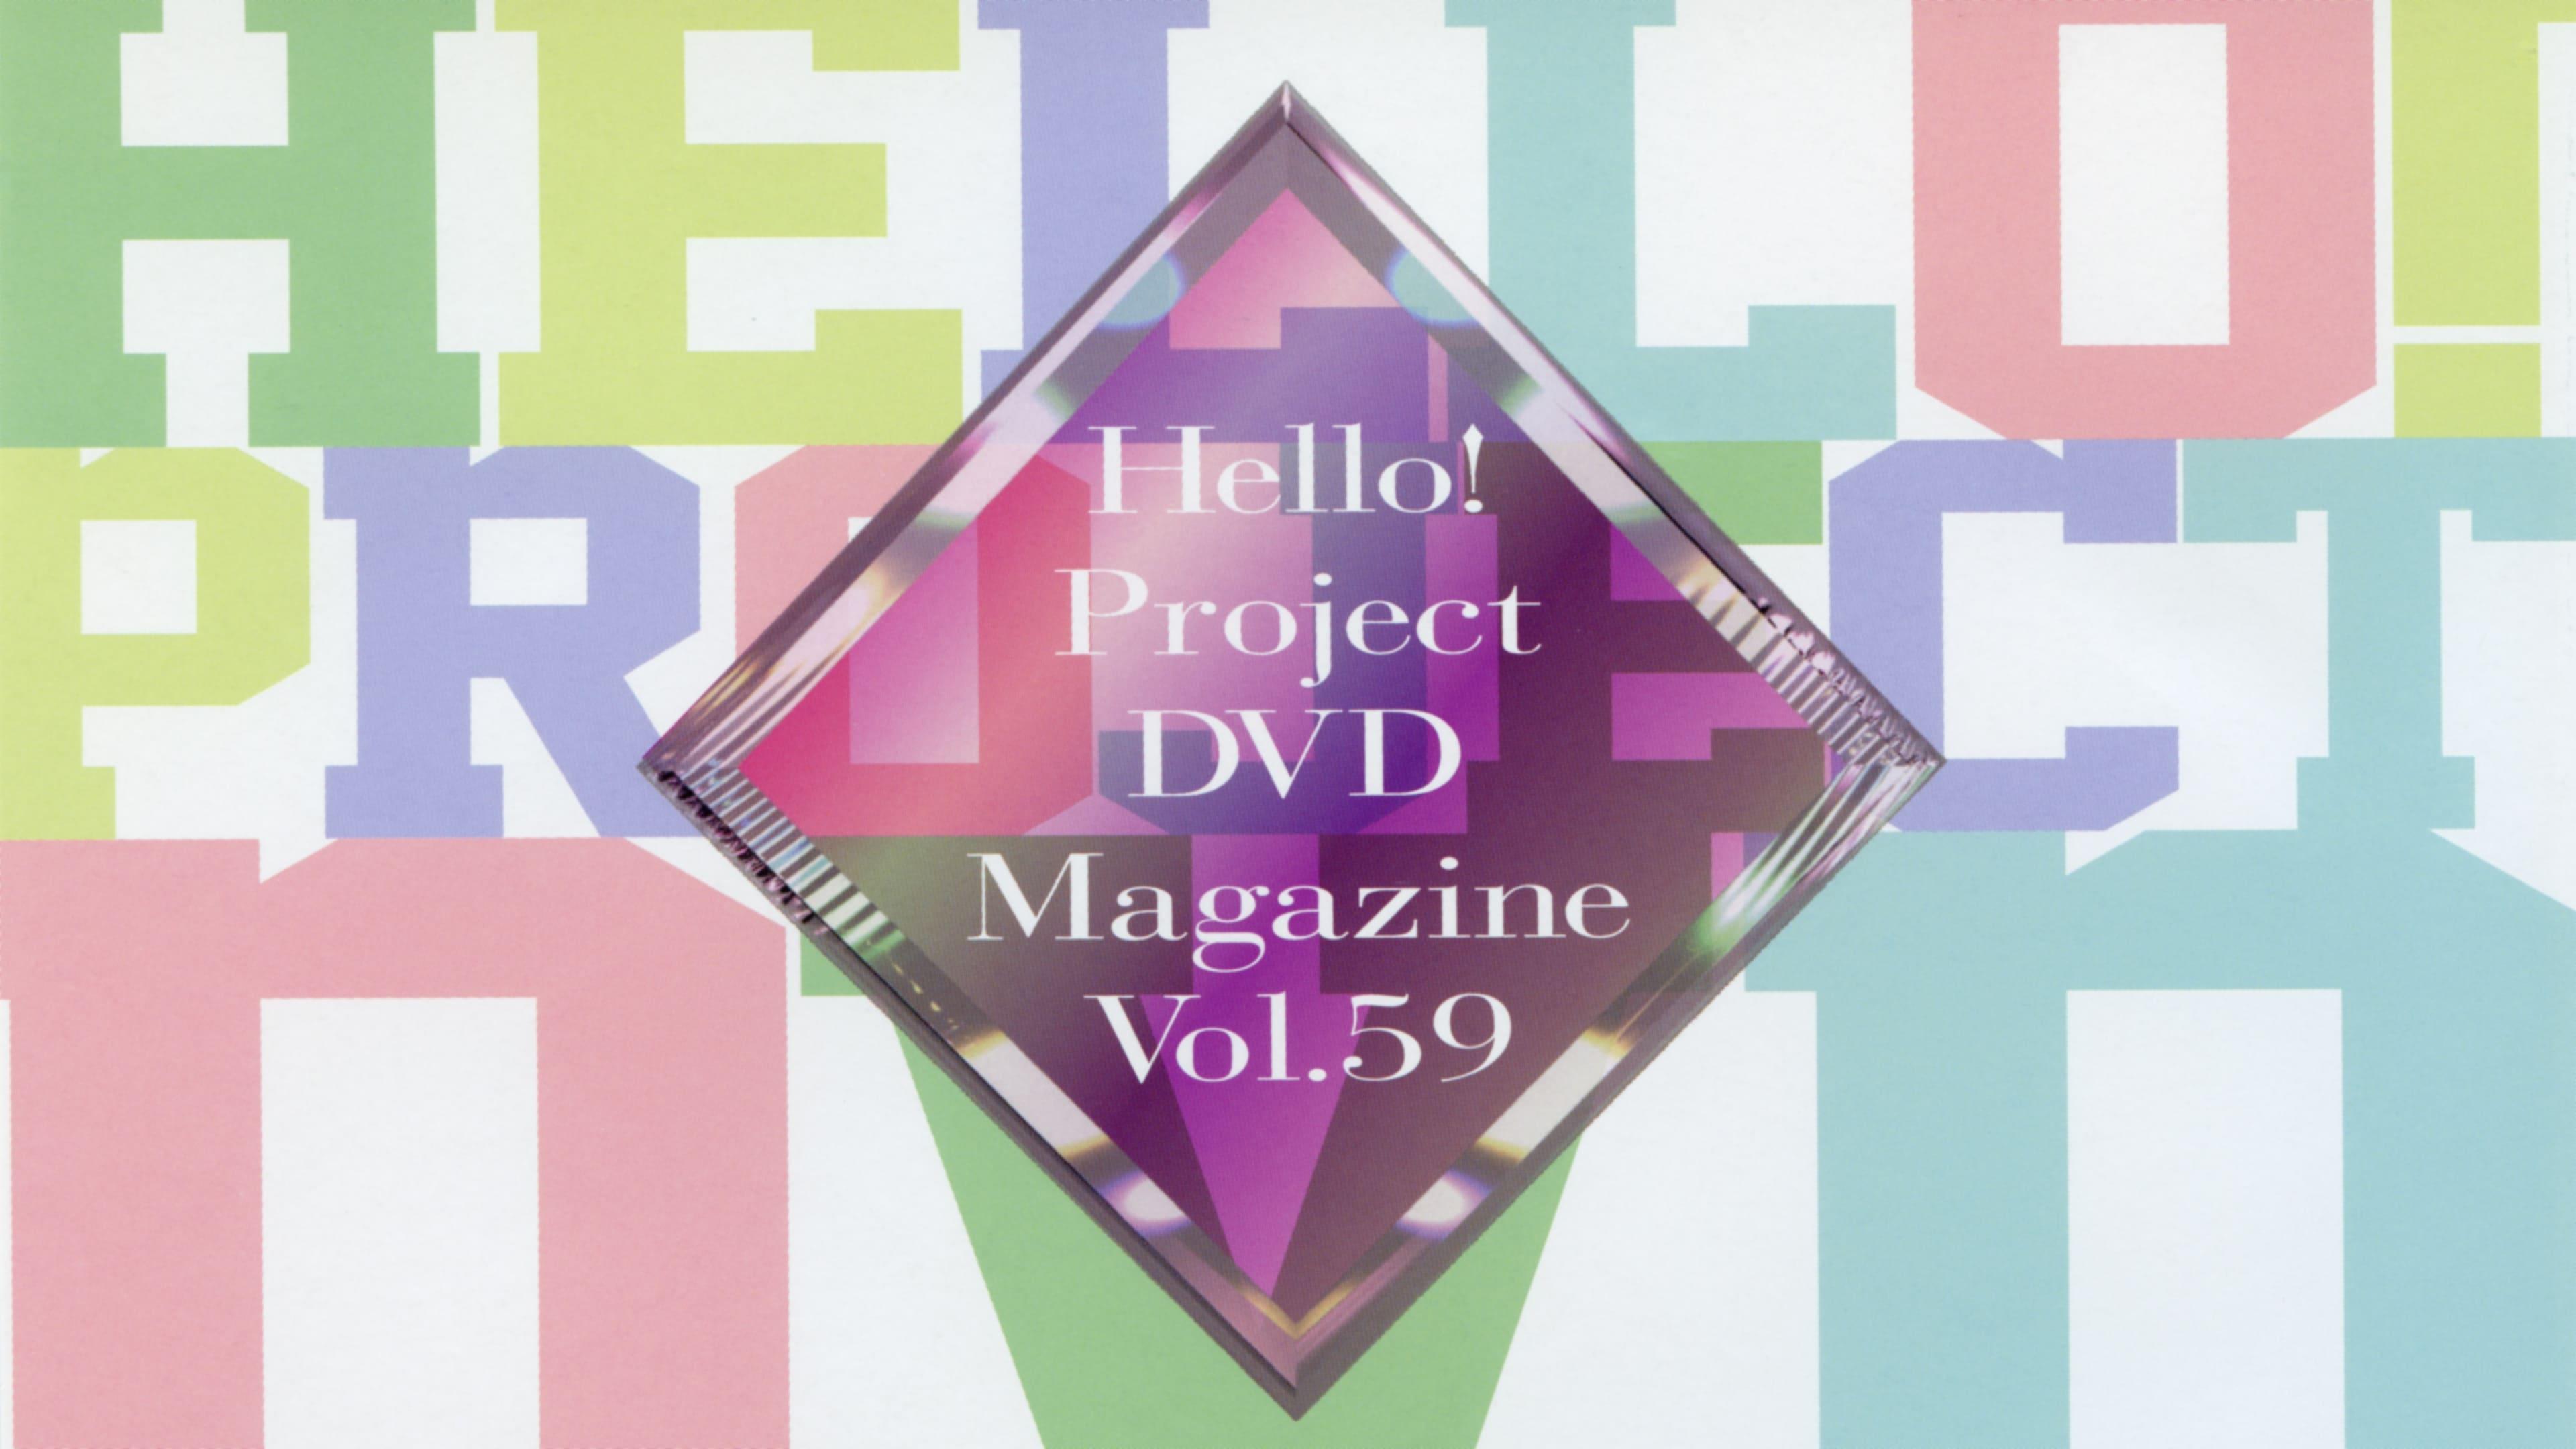 Hello! Project DVD Magazine Vol.59 backdrop